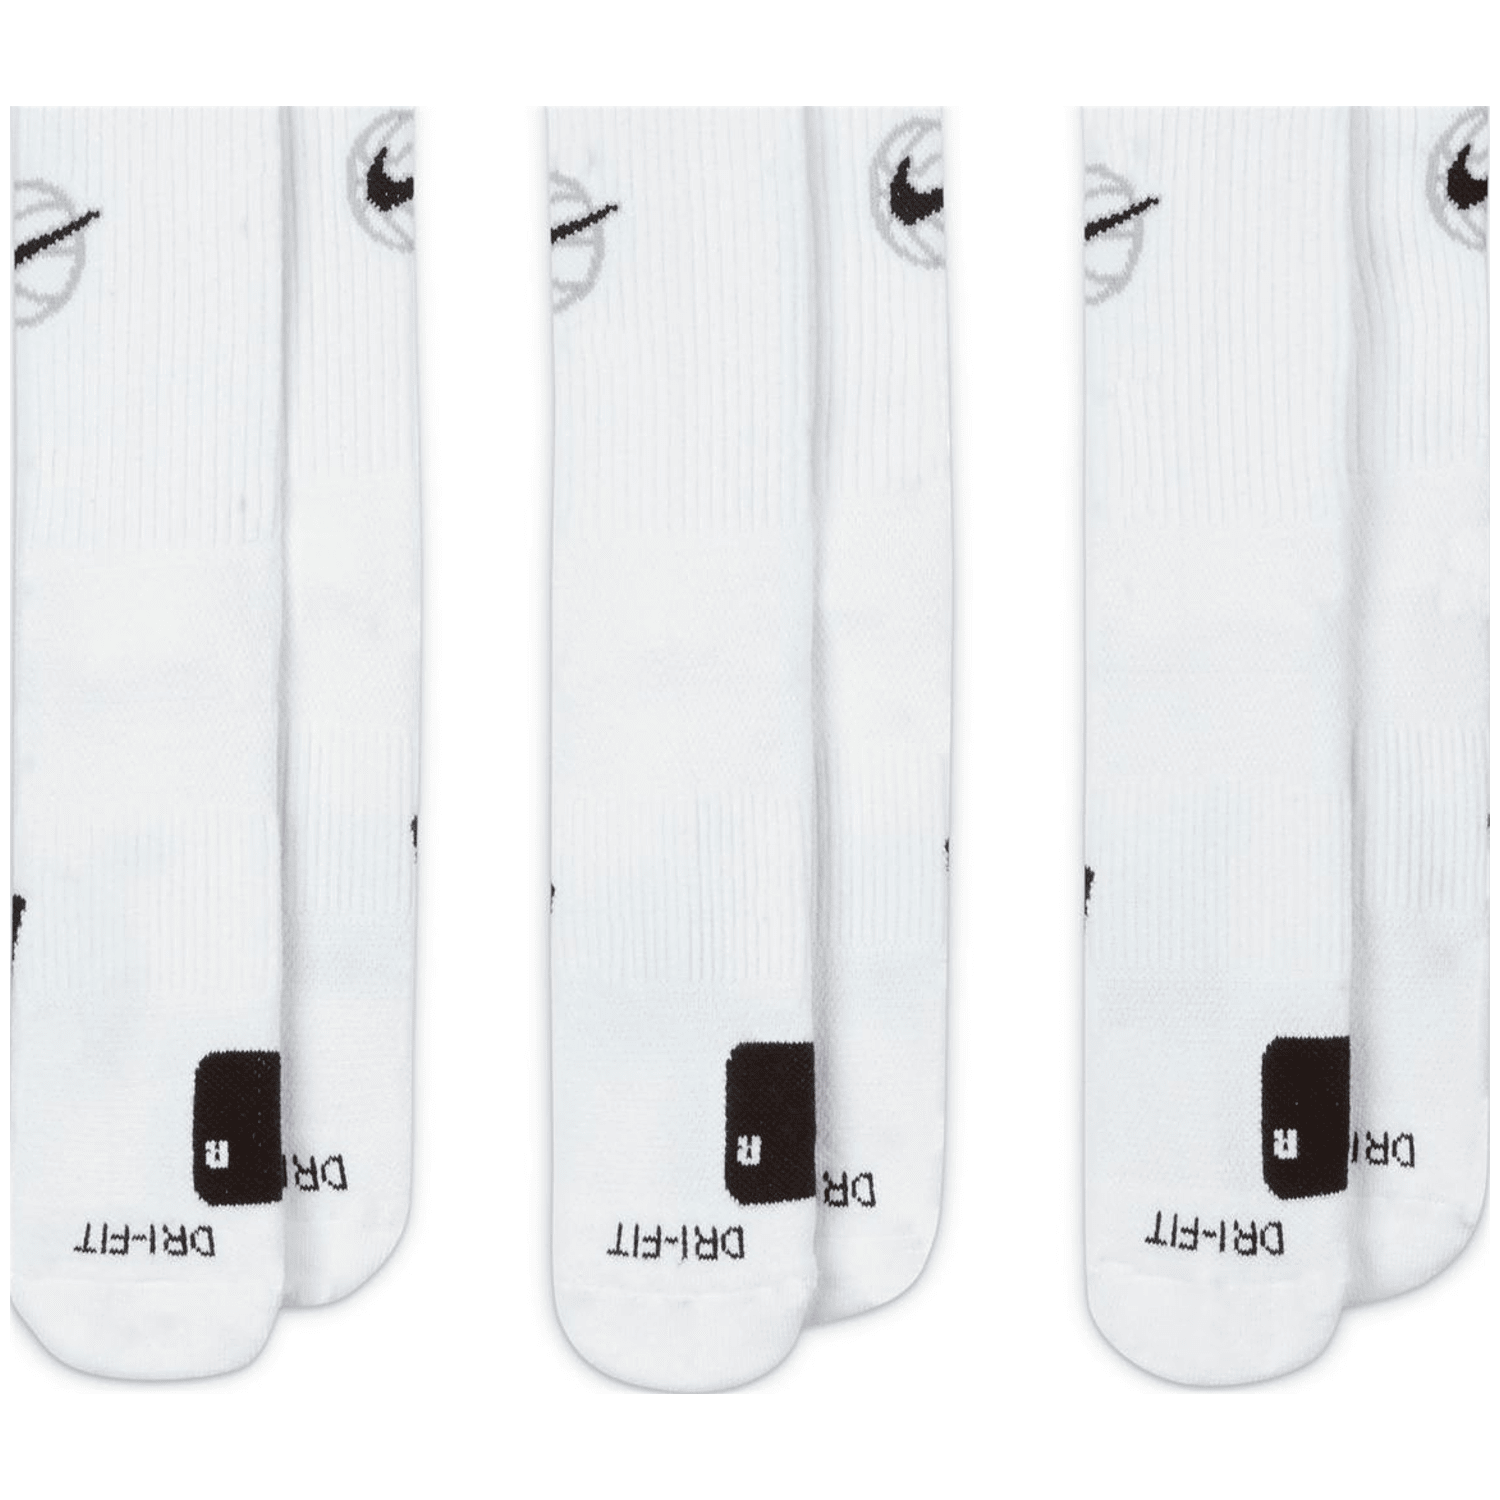 Nike Everyday Crew (3 Pair) Unisex Socken